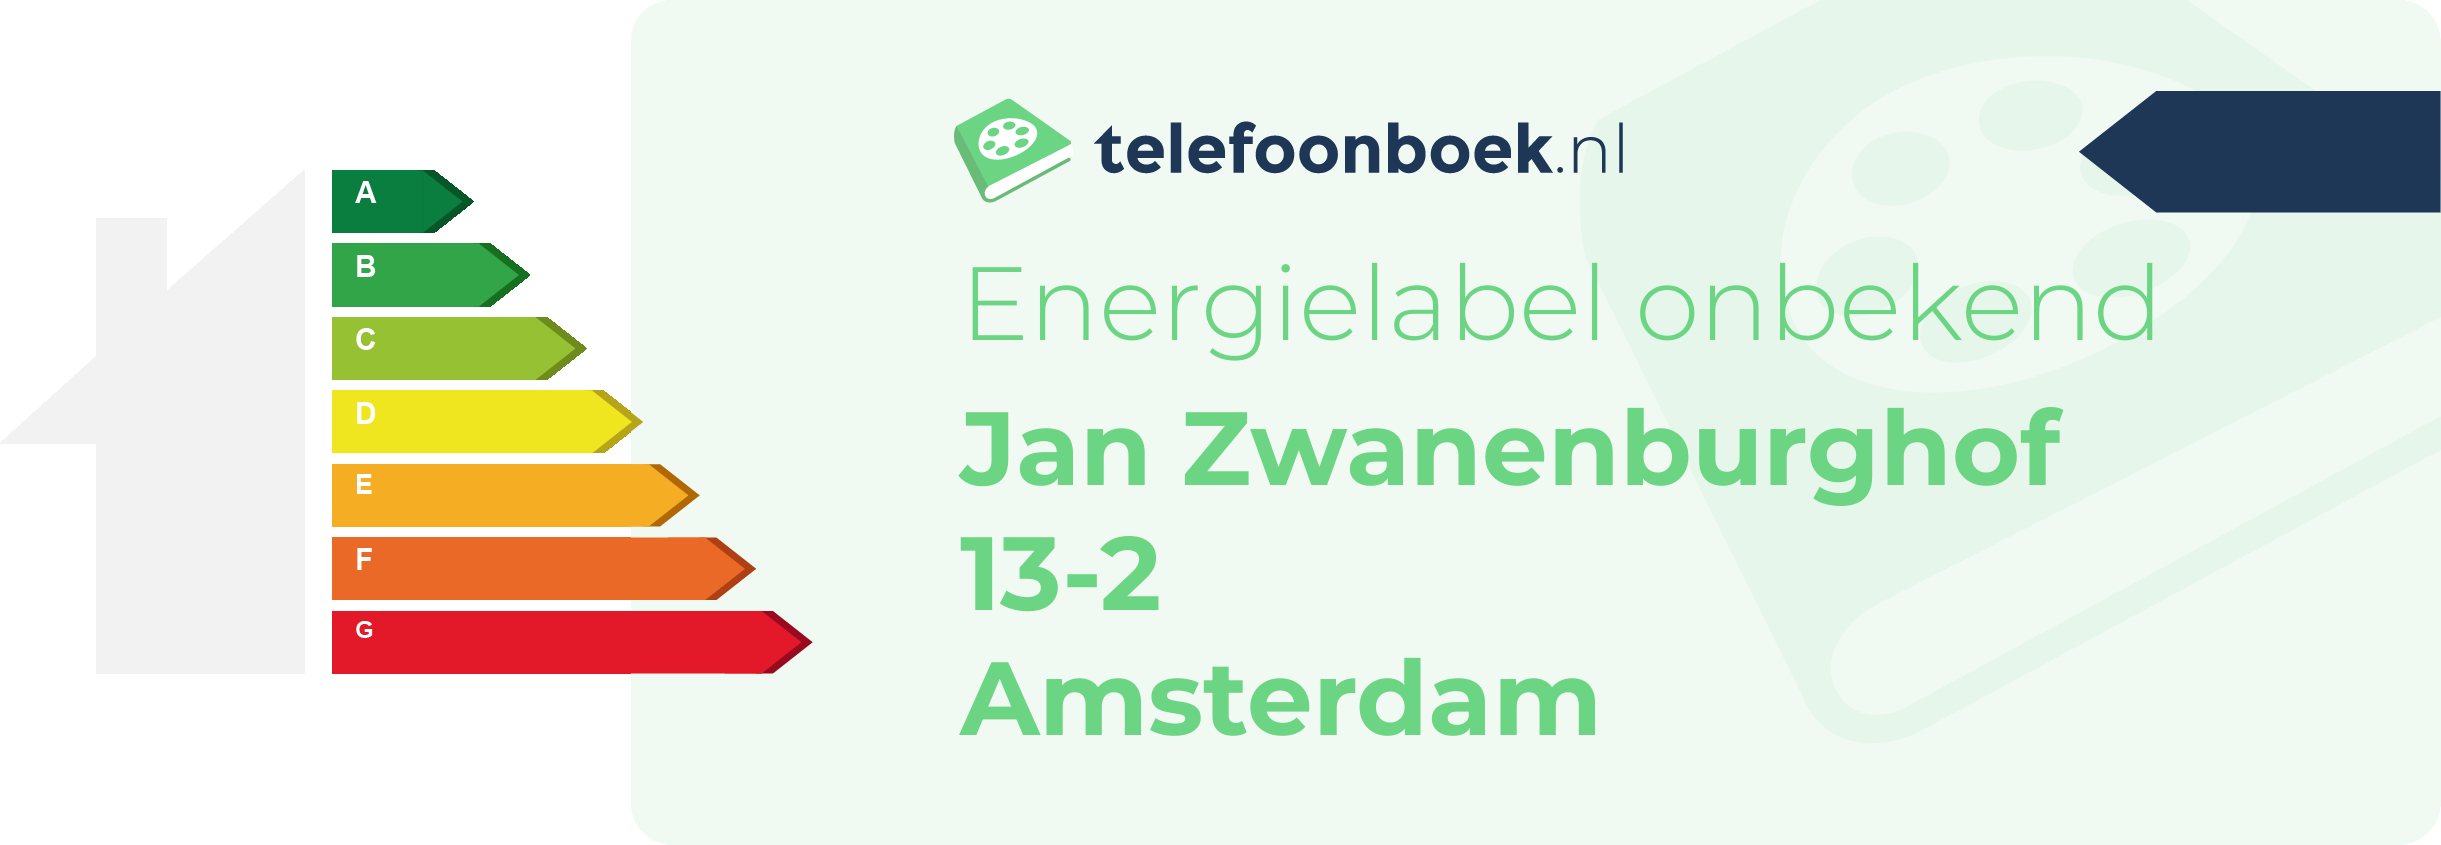 Energielabel Jan Zwanenburghof 13-2 Amsterdam